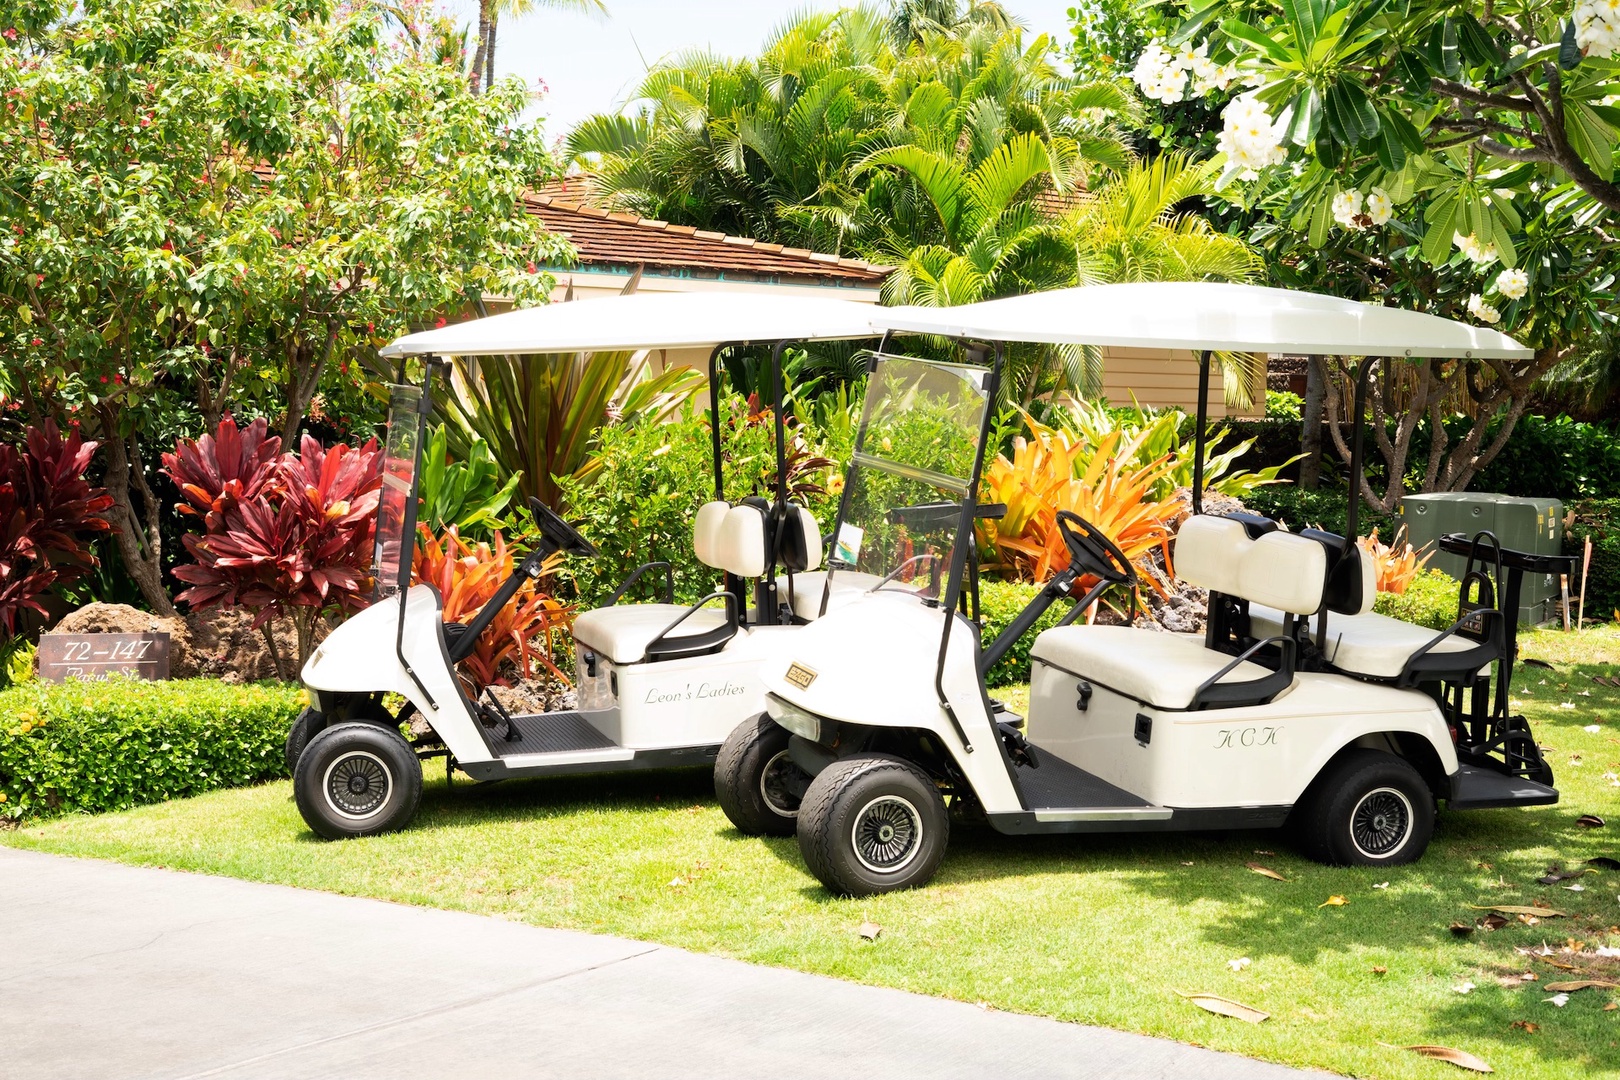 Kailua Kona Vacation Rentals, 4BD Pakui Street (147) Estate Home at Four Seasons Resort at Hualalai - This rental comes with two 4-seater golf carts.